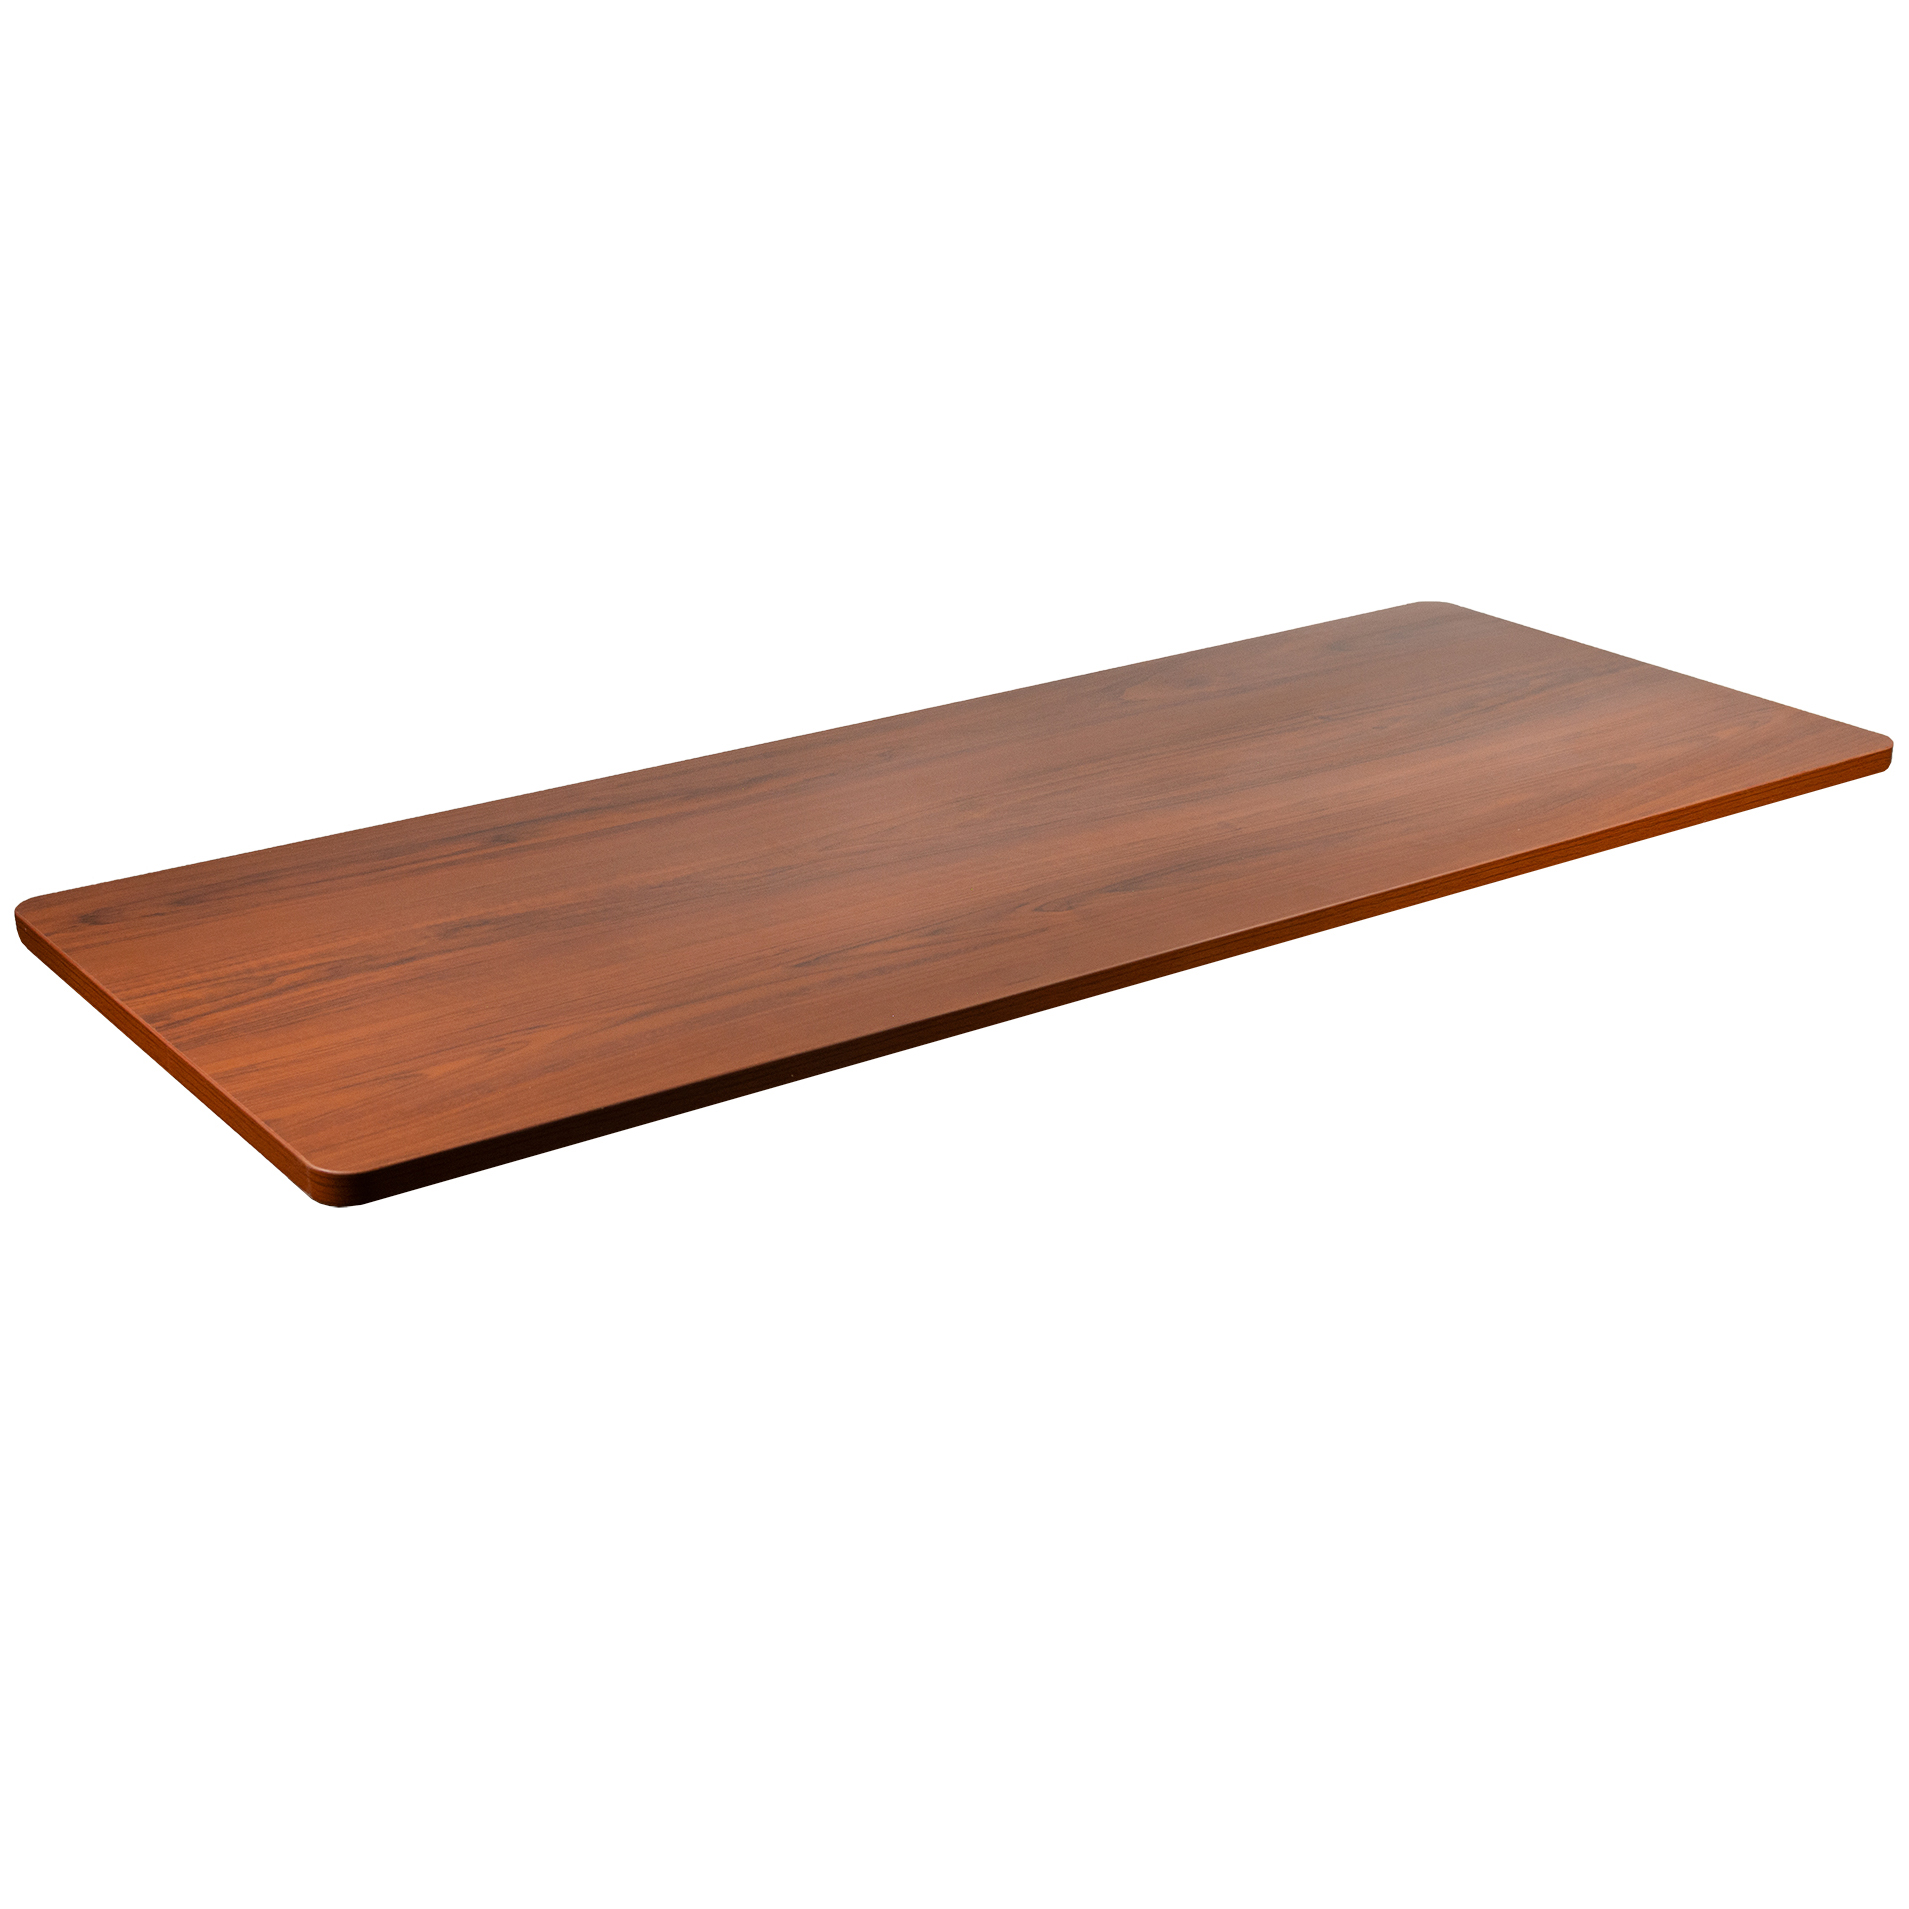 Used Vivo Dark Walnut 60 X 24 Inch Universal Table Top For Sit Stand Desk Frames Ebay